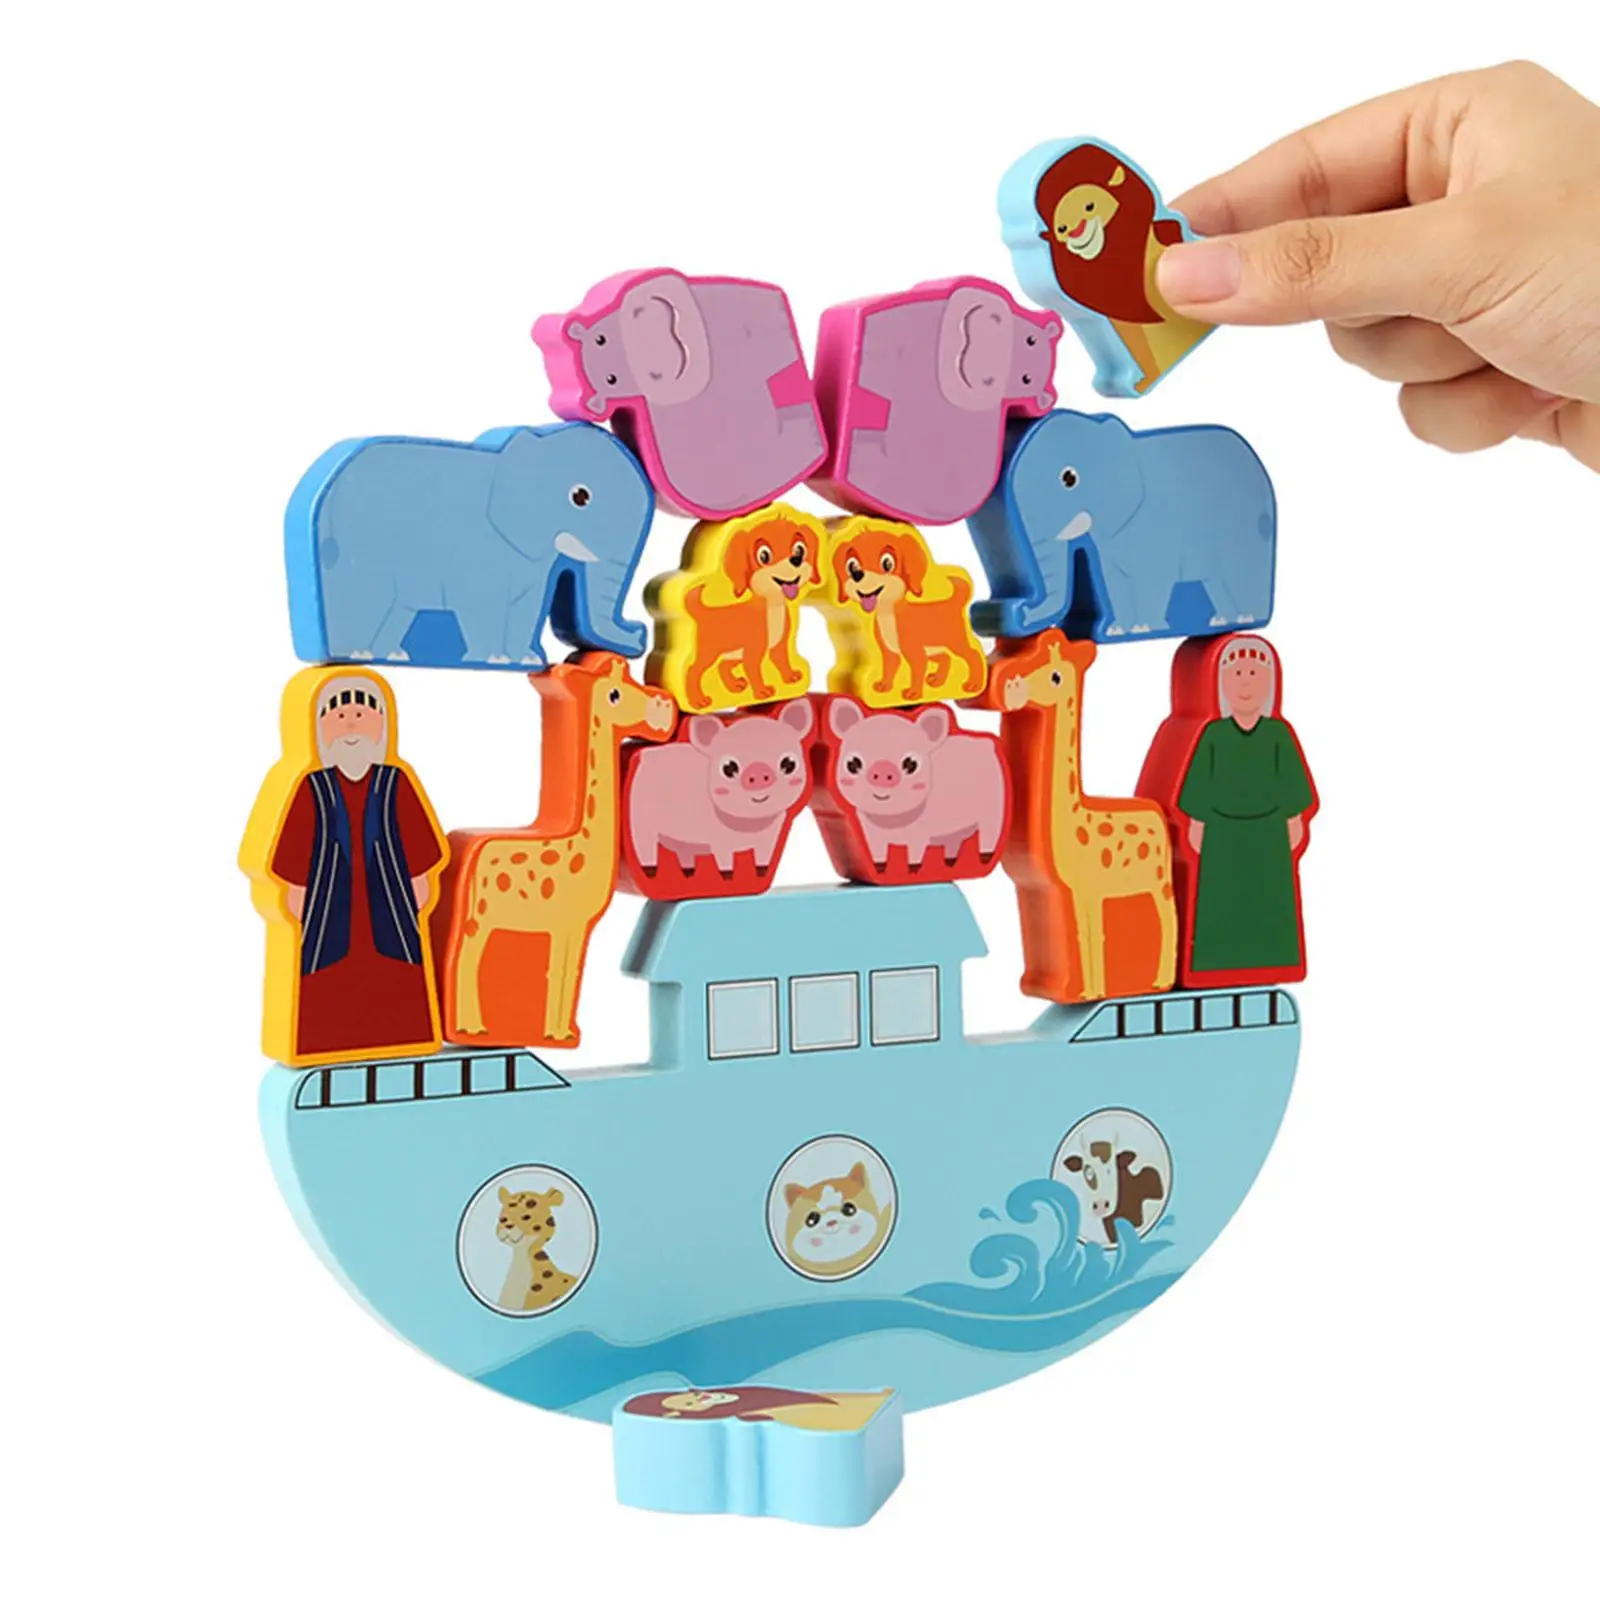 Montessori Wooden Blocks Animal Toys Educational Toys Preschool Game Motor Skills Brain Development for Kids Birthday Gifts